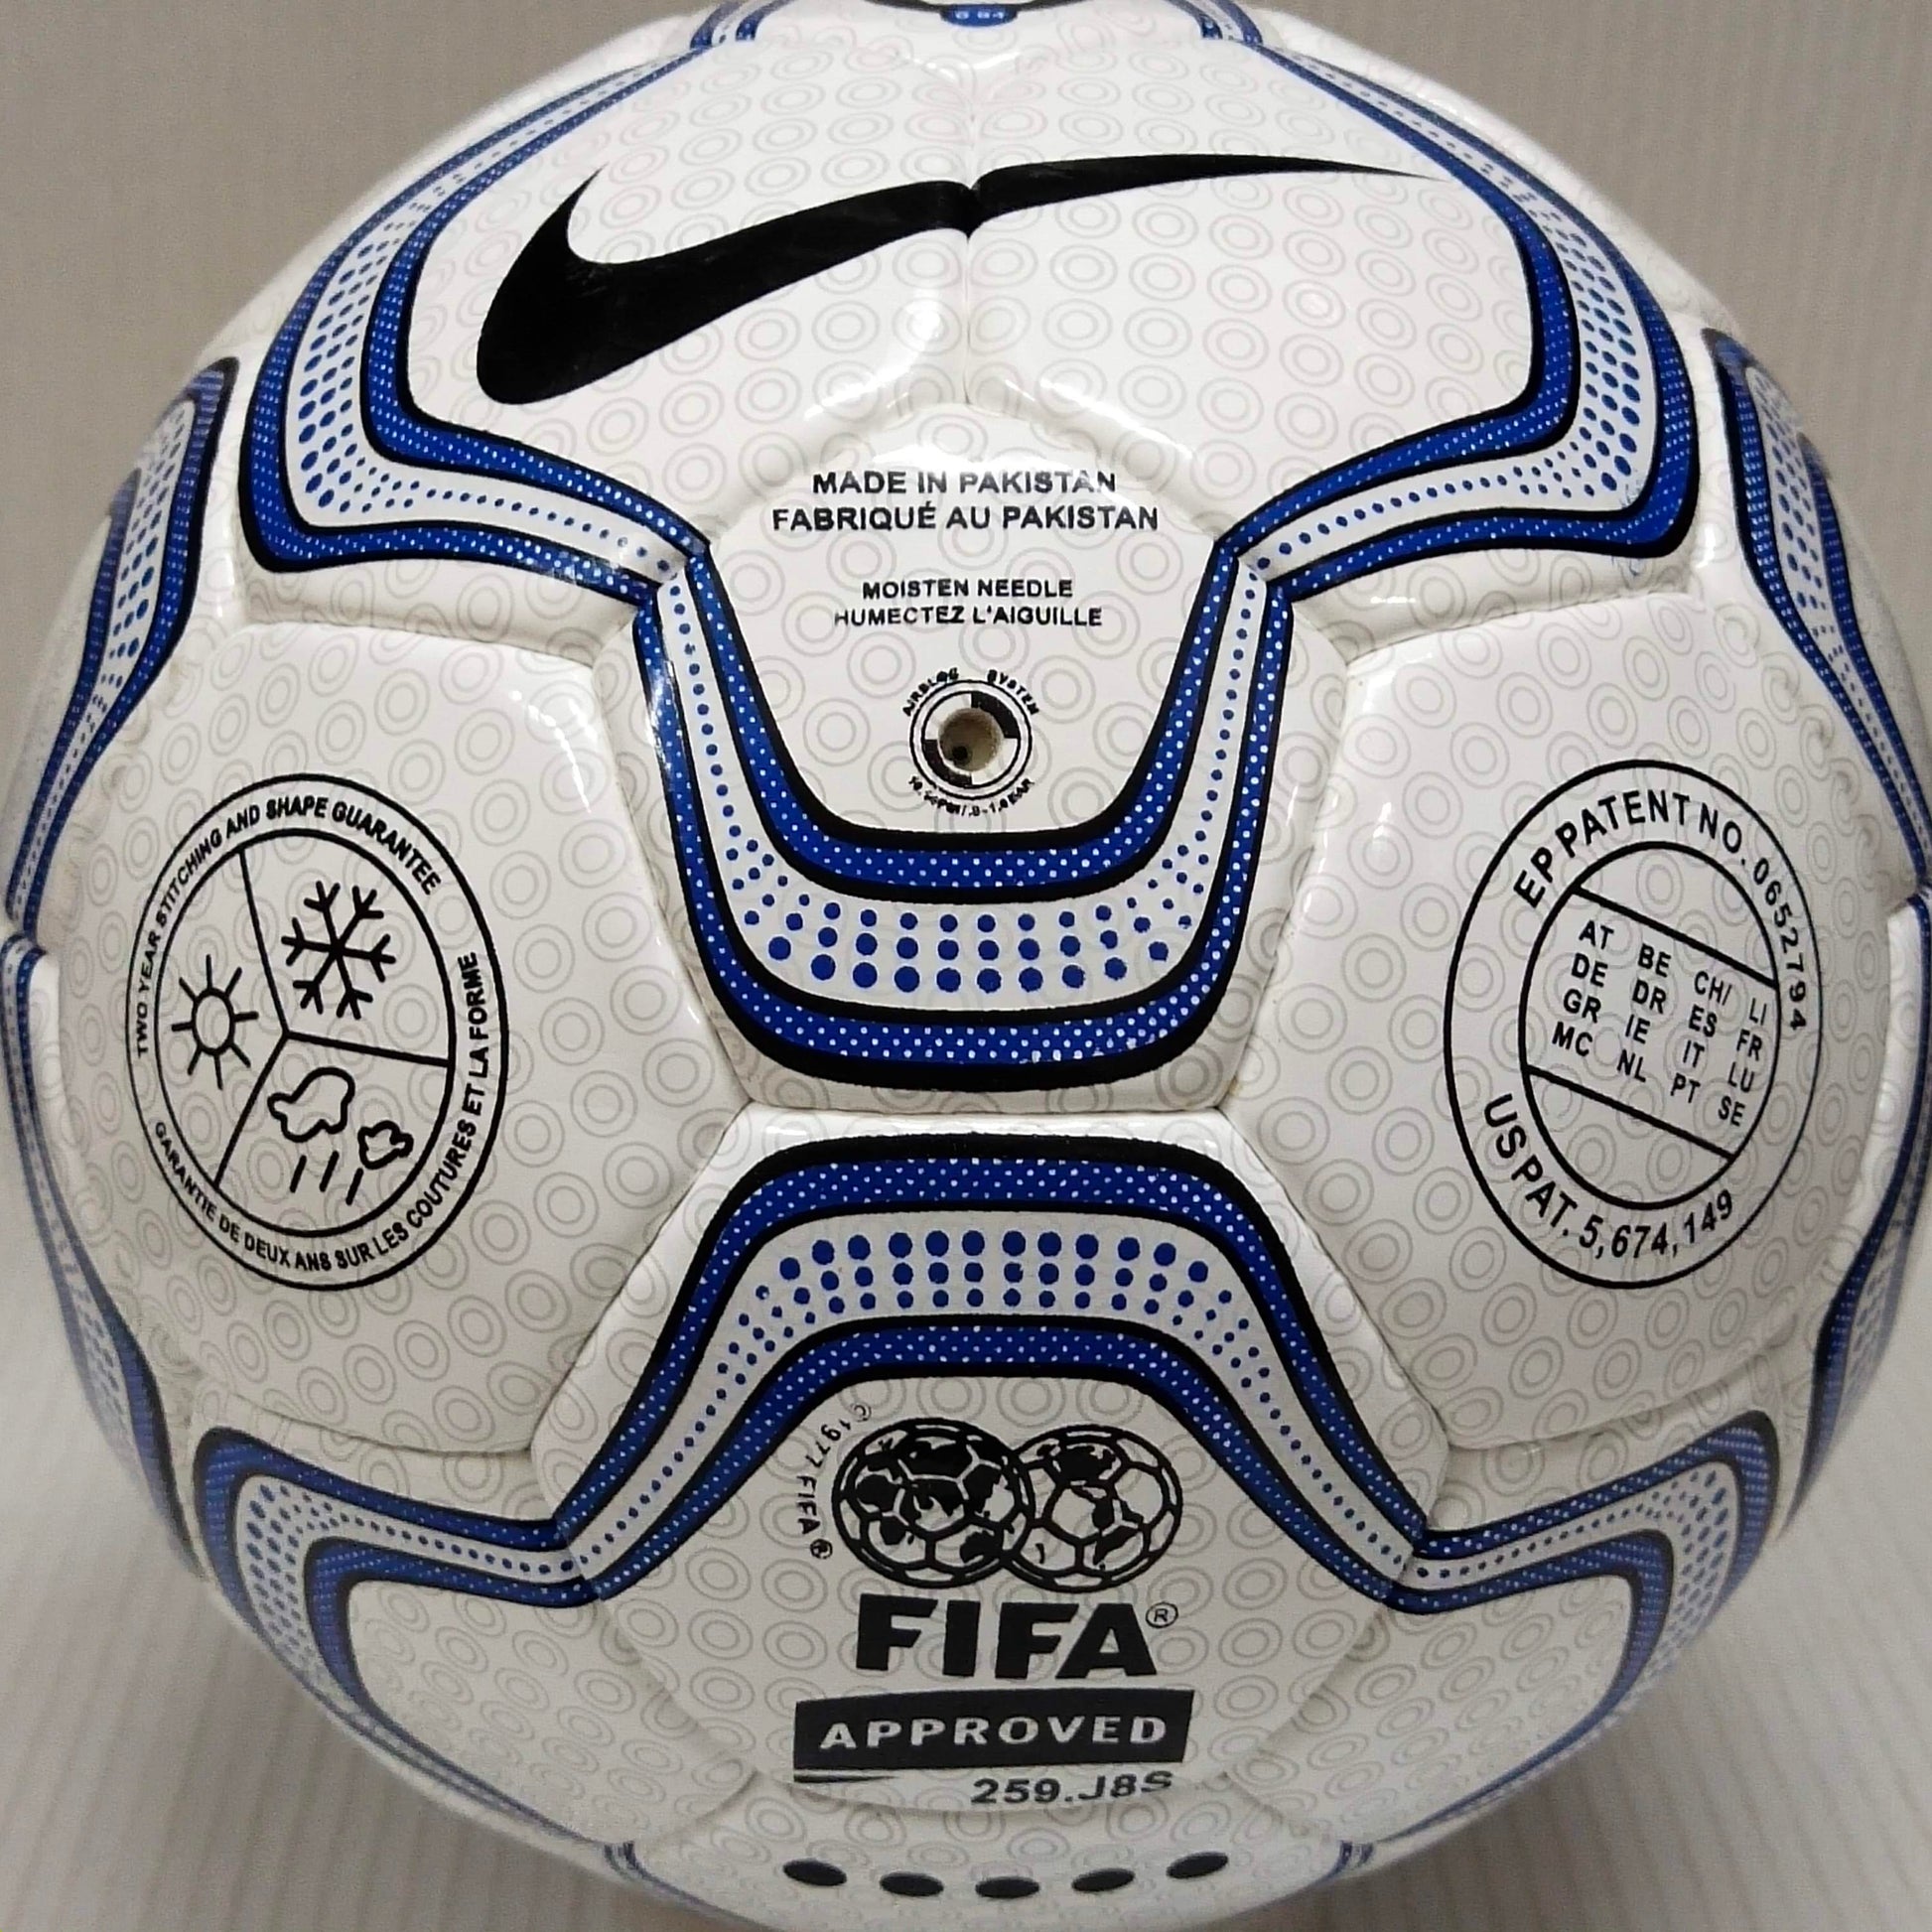 Nike Geo Merlin | 2000-2001 | UEFA Champions League Ball | Size 5 04